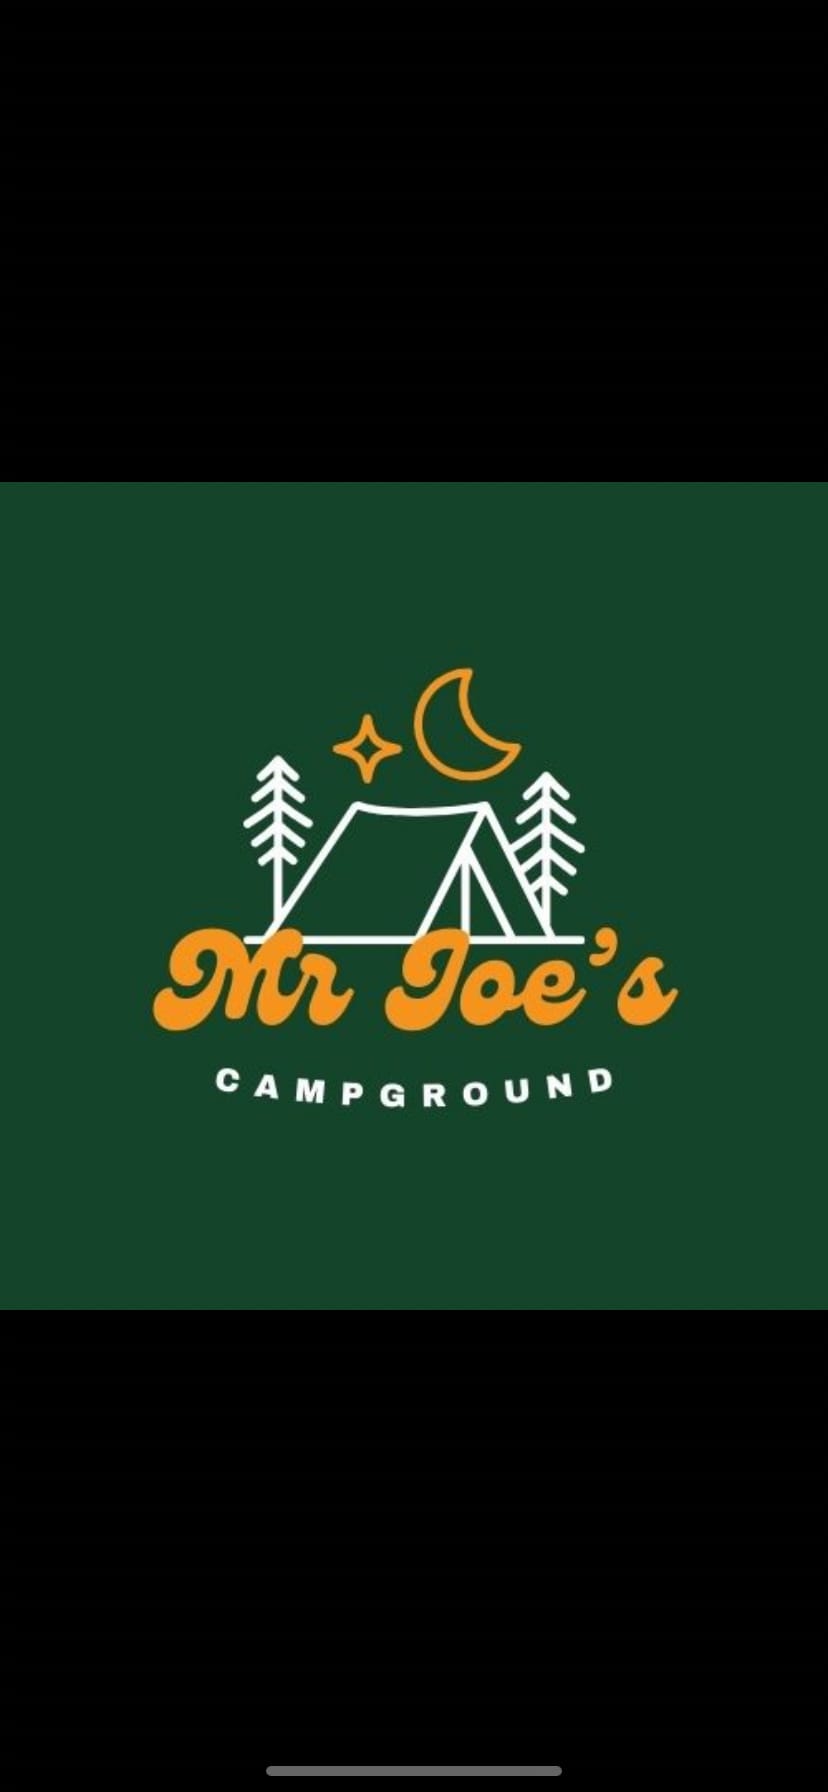 Mr. Joe's Campground